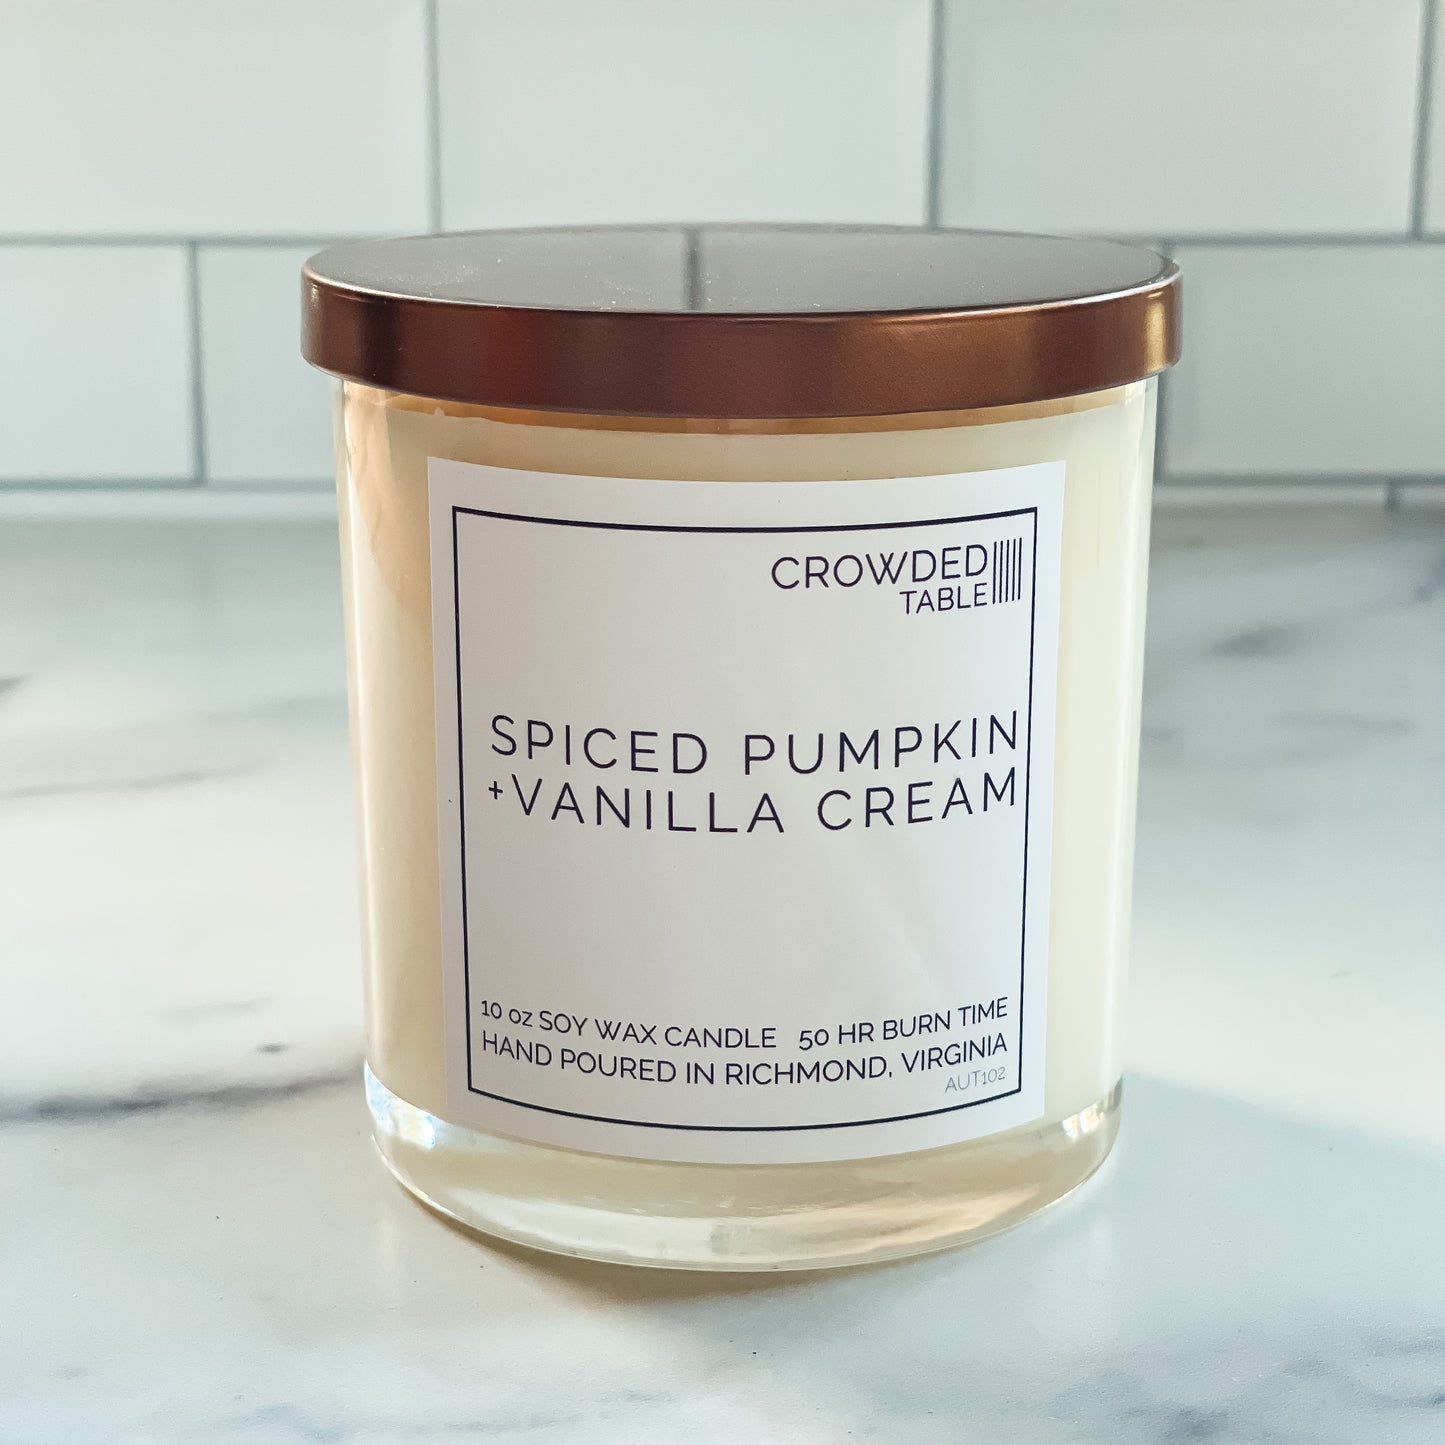 Spiced Pumpkin + Vanilla Cream 10 oz. Pure Soy Wax Candle